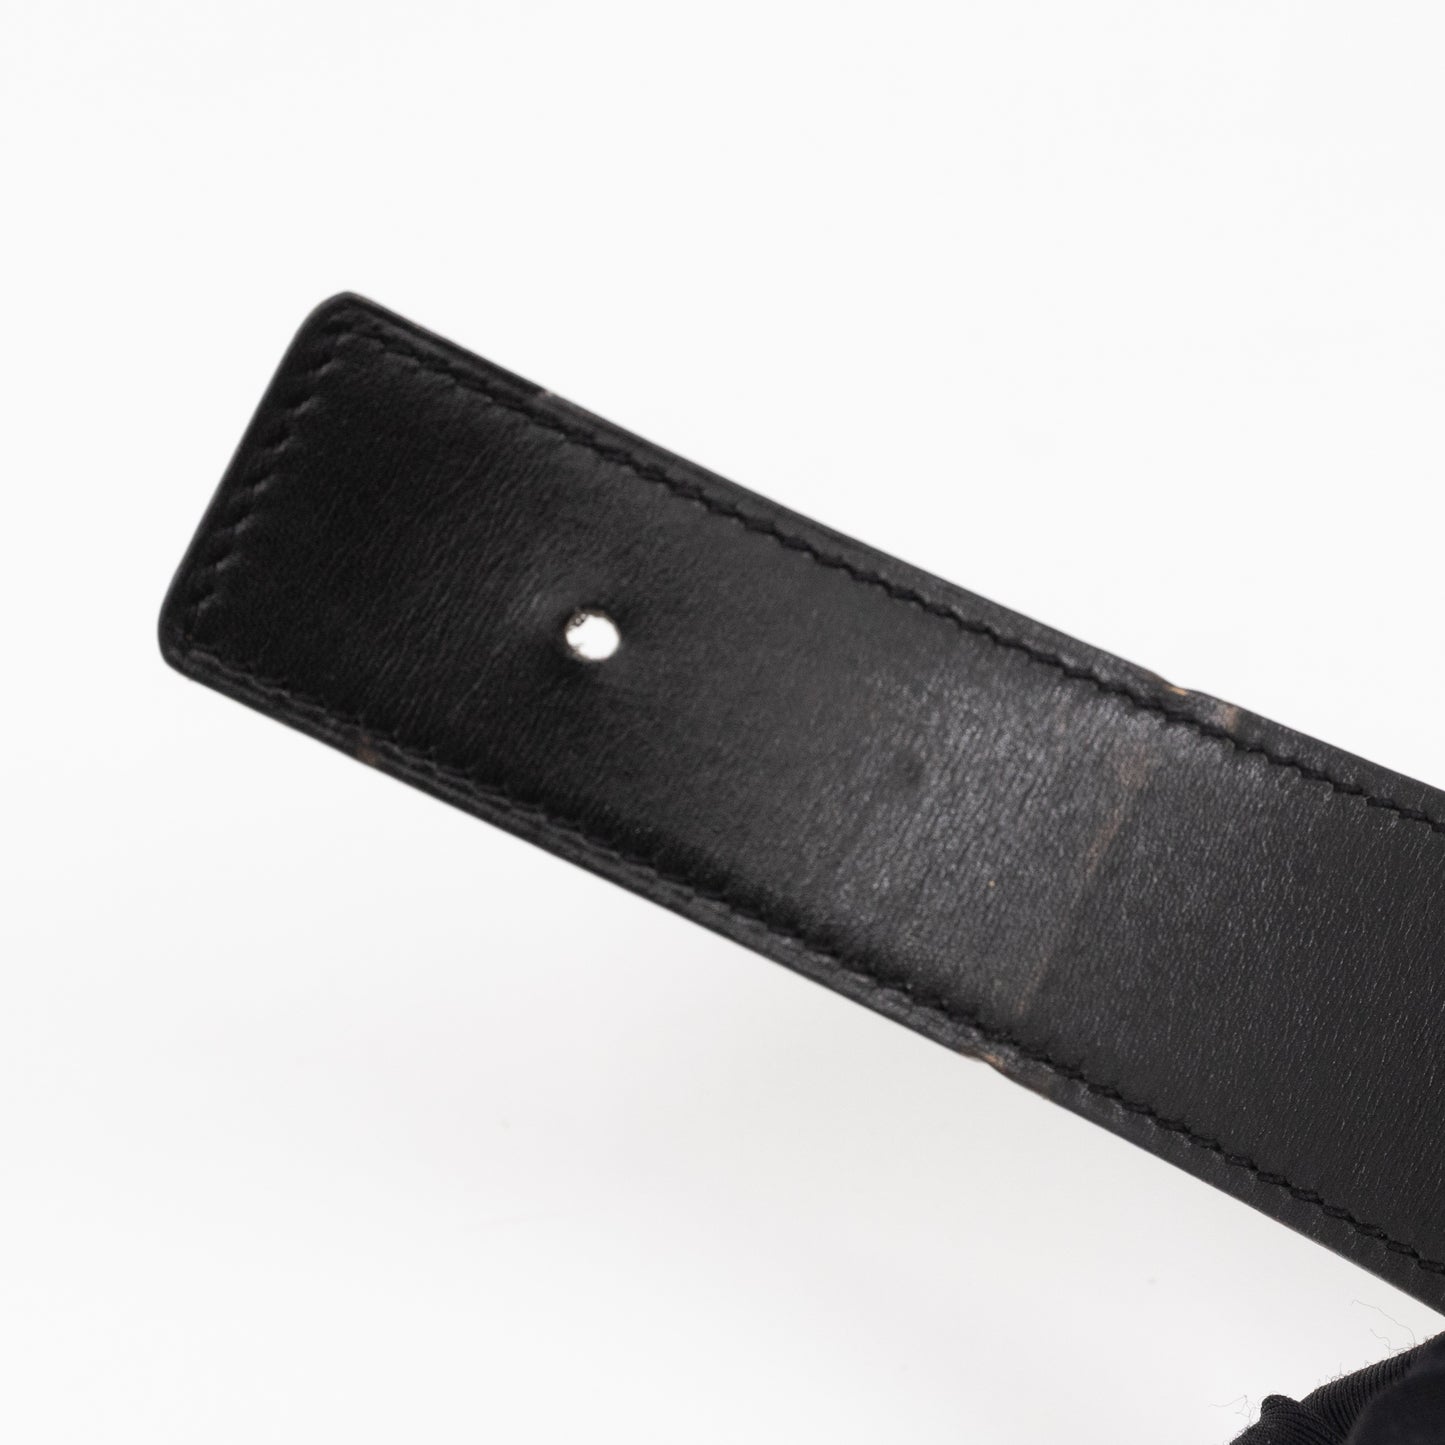 H Martelee Buckle & Reversible Gold and Black Leather Belt 80 cm